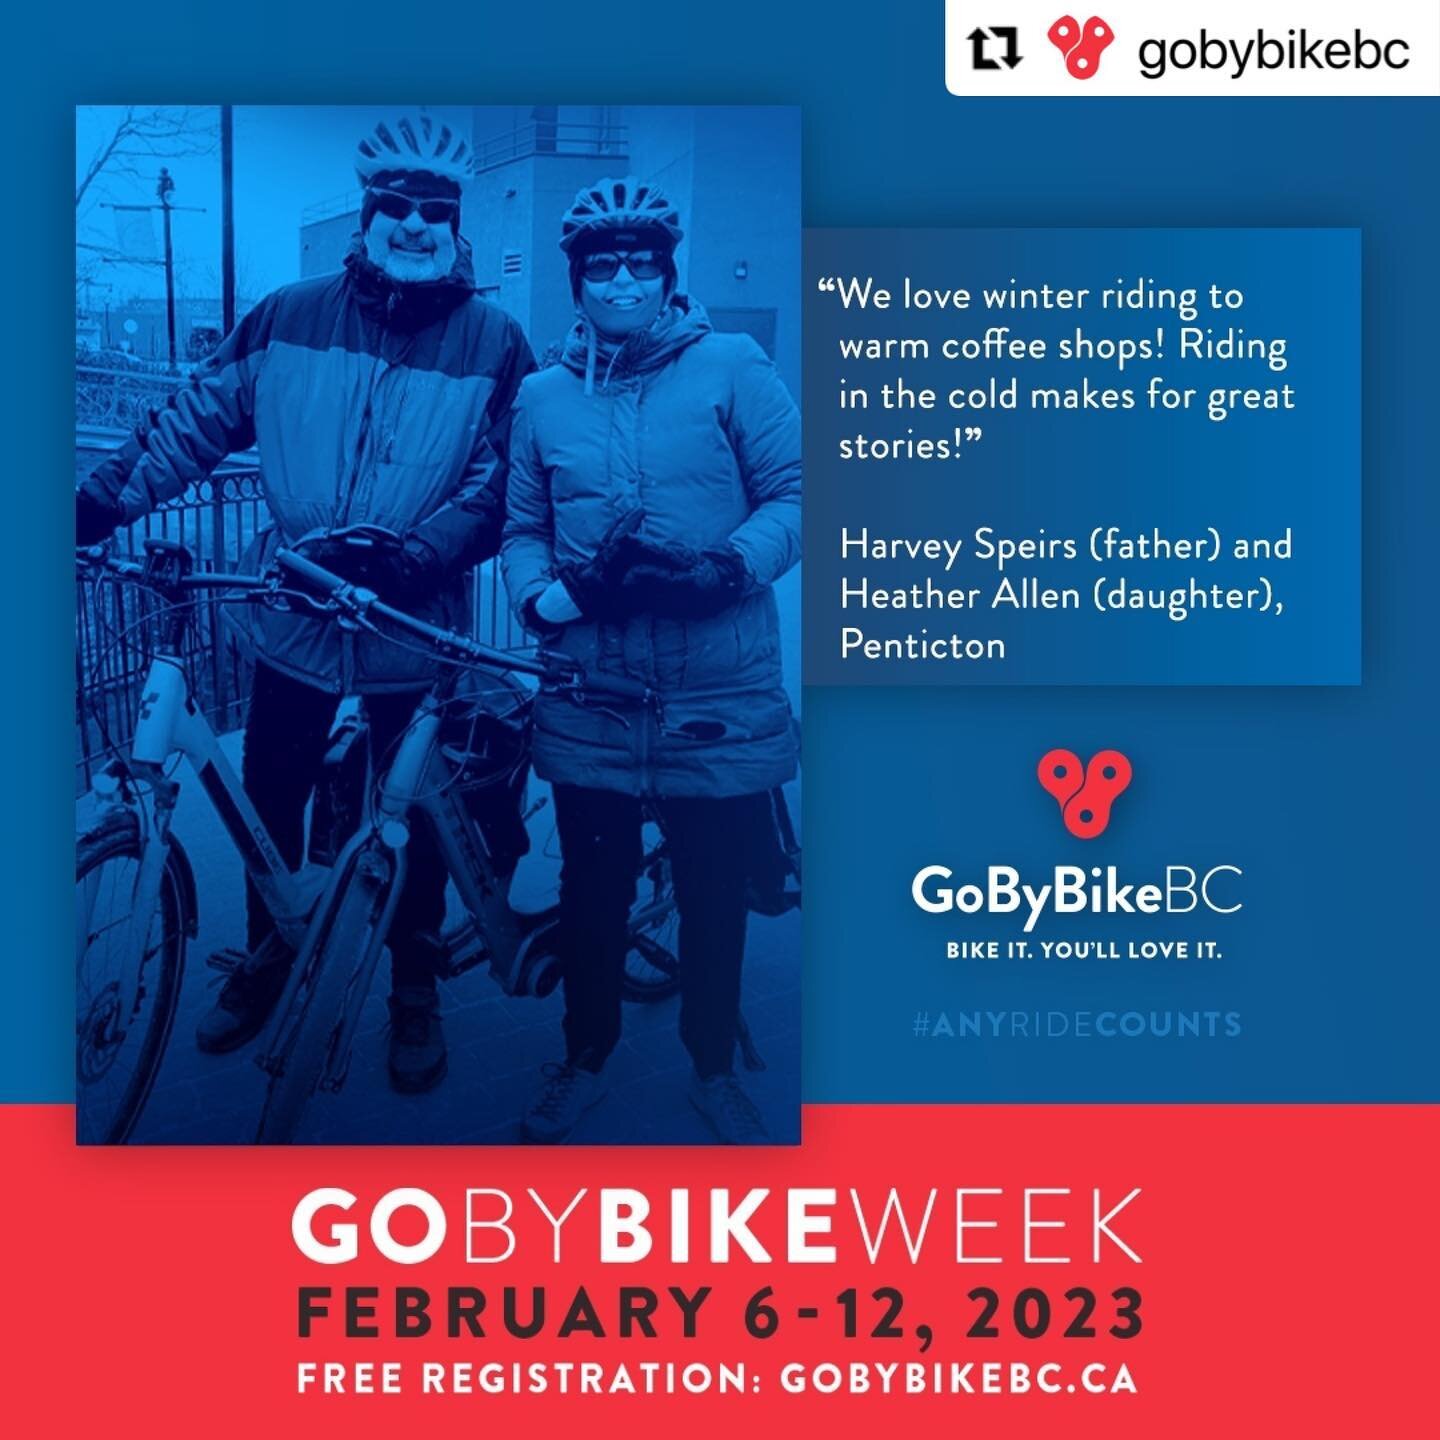 GoByBike Week Kicks Off TOMORROW 
Monday, February 6th 
🚲🚲🚲🚲🚲

🔗 Links in Bio to register and there&rsquo;s even an RCCC team!

#gobybike #gobybikeweek
#gobybike
#biketowork #biketoschool #biketofun #bikeeveryday #bikeeverywhere 
#weberiding 
#